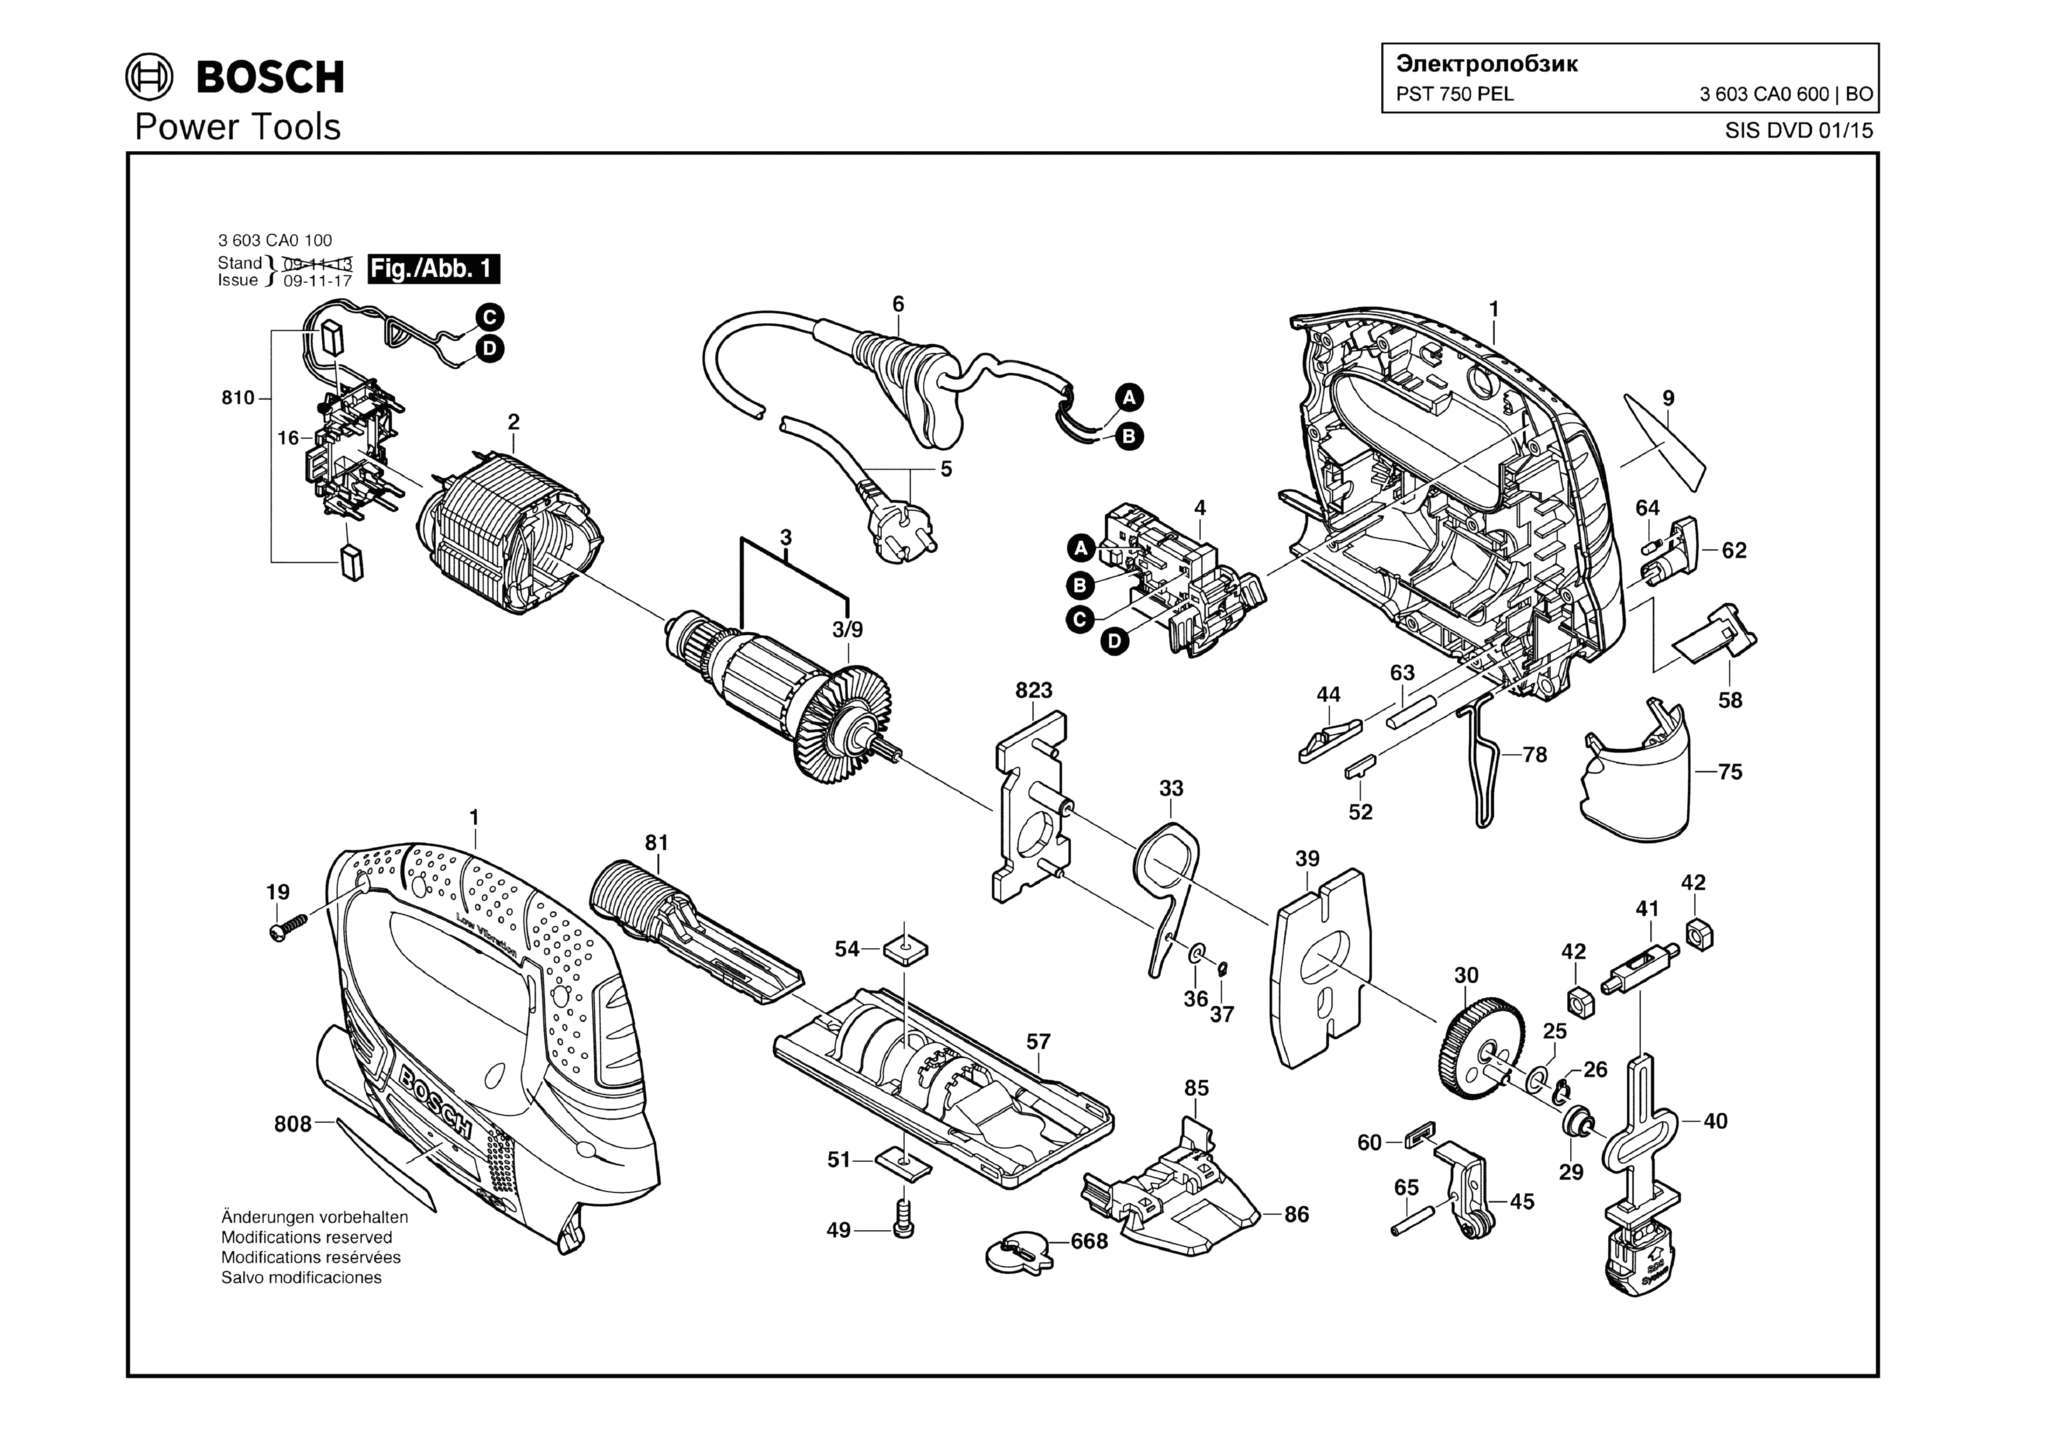 Запчасти, схема и деталировка Bosch PST 750 PEL (ТИП 3603CA0600)